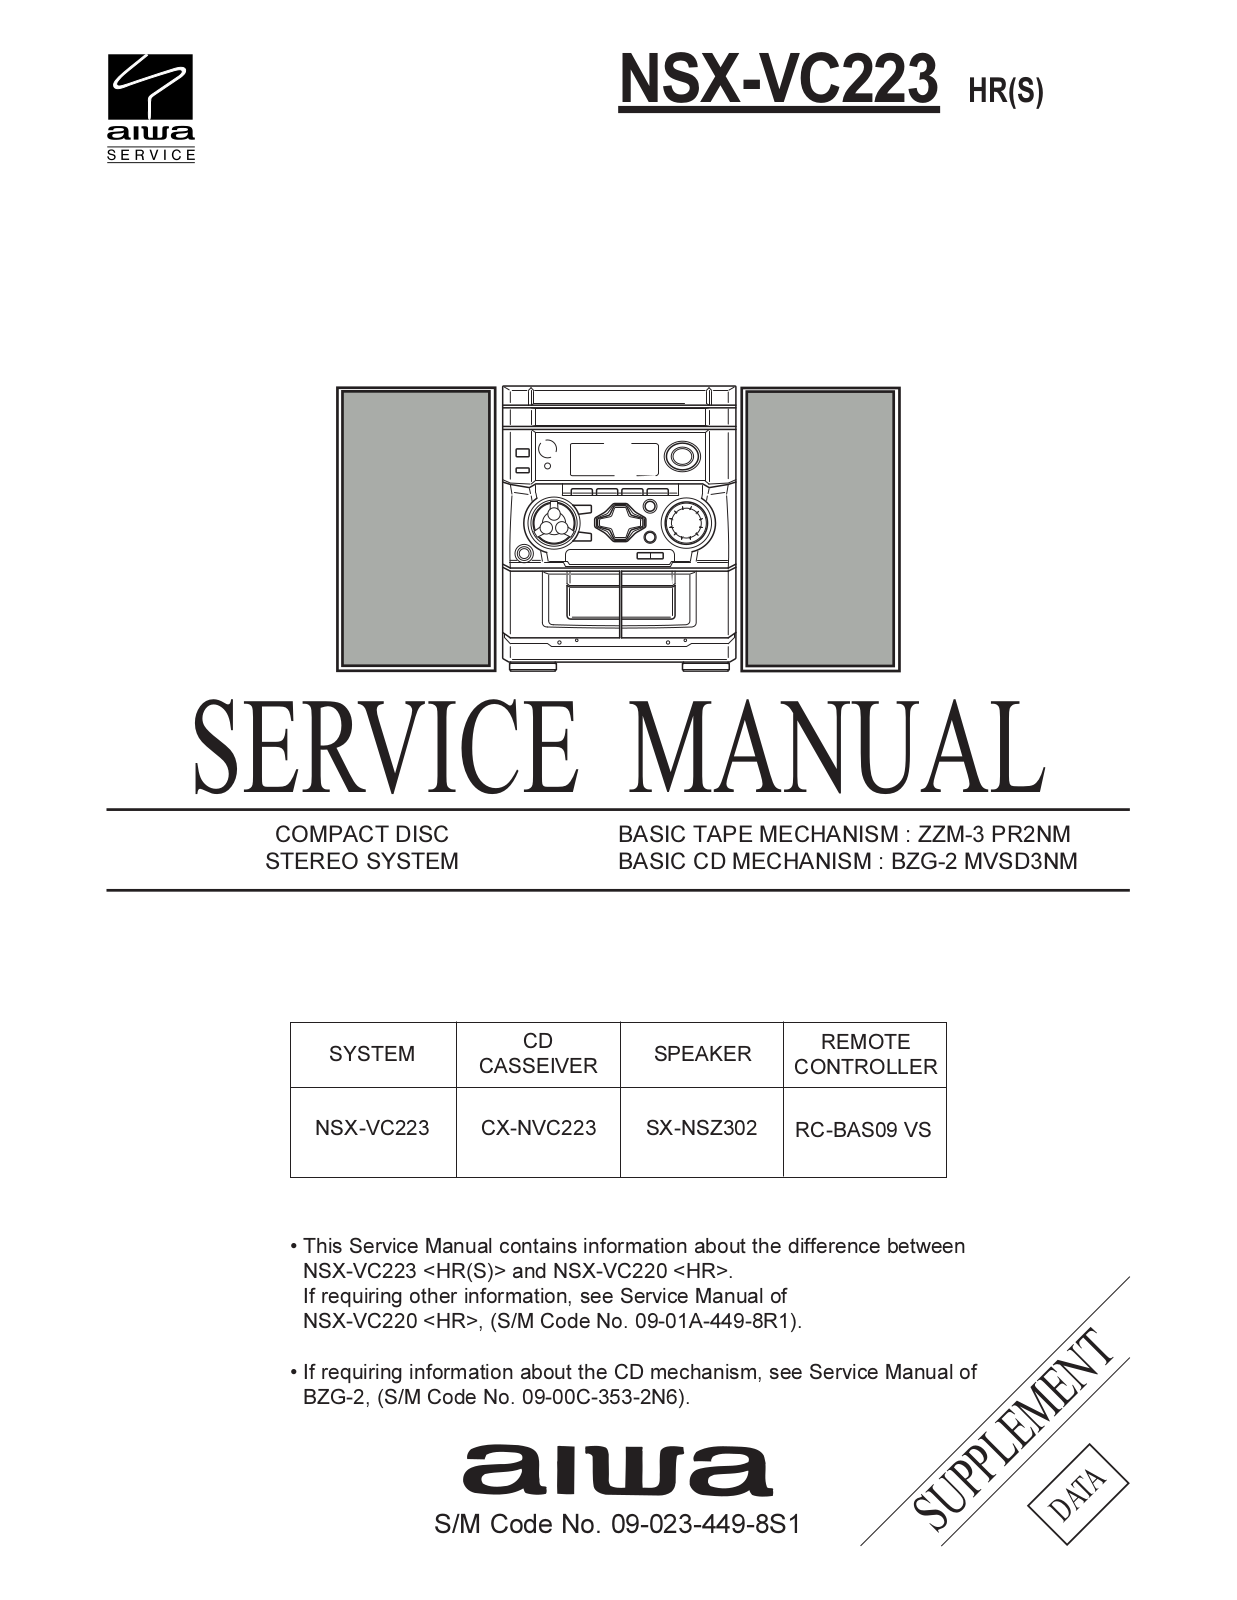 Aiwa NSX-VC223 Service Manual